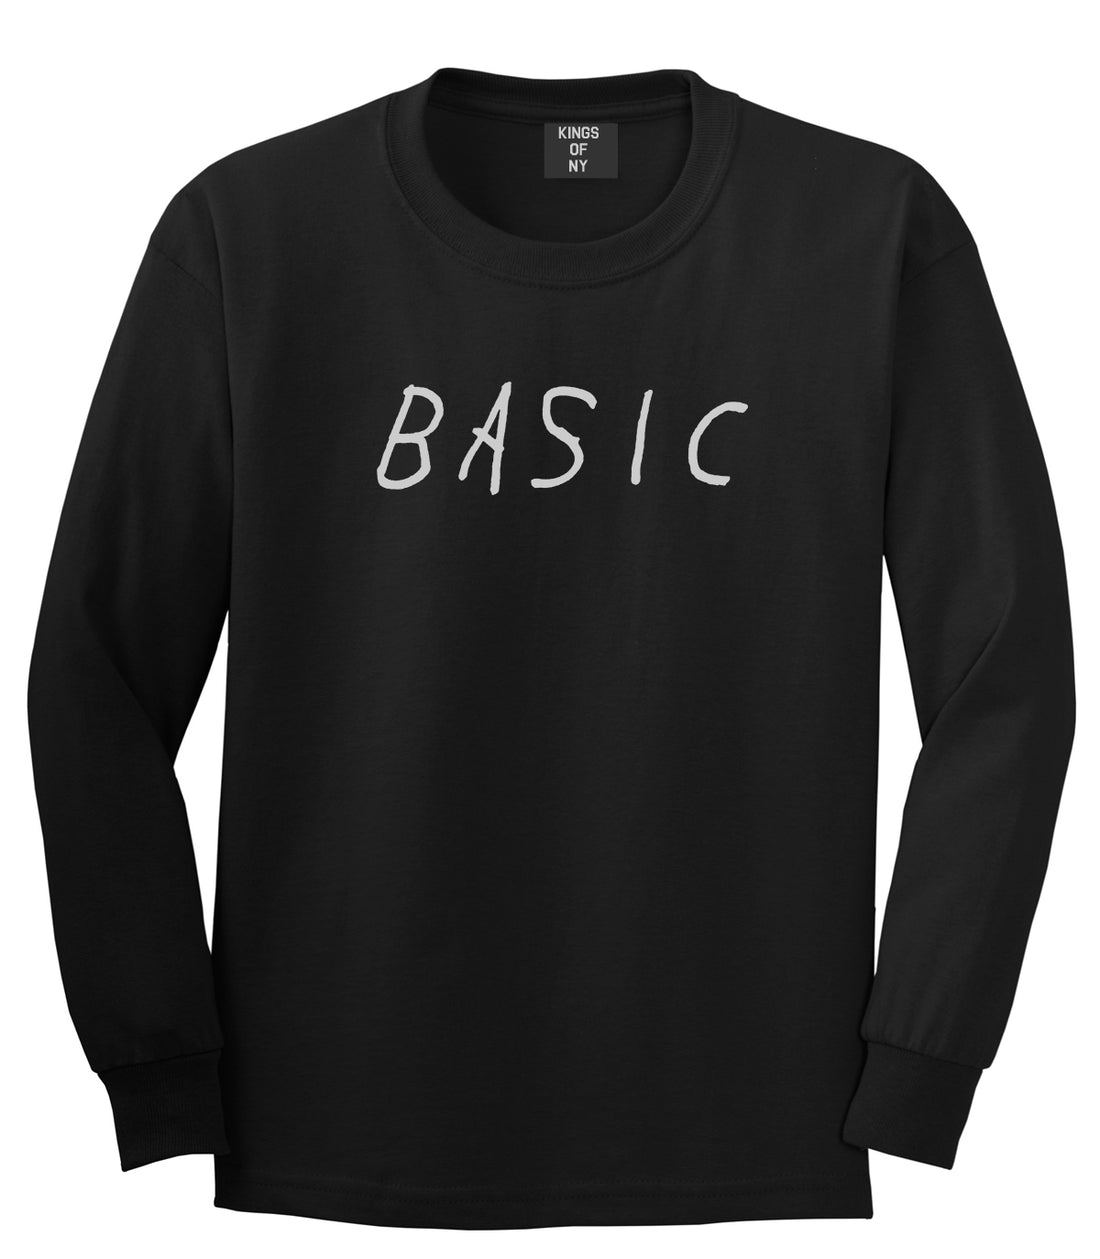 Basic Plain Black Long Sleeve T-Shirt by Kings Of NY